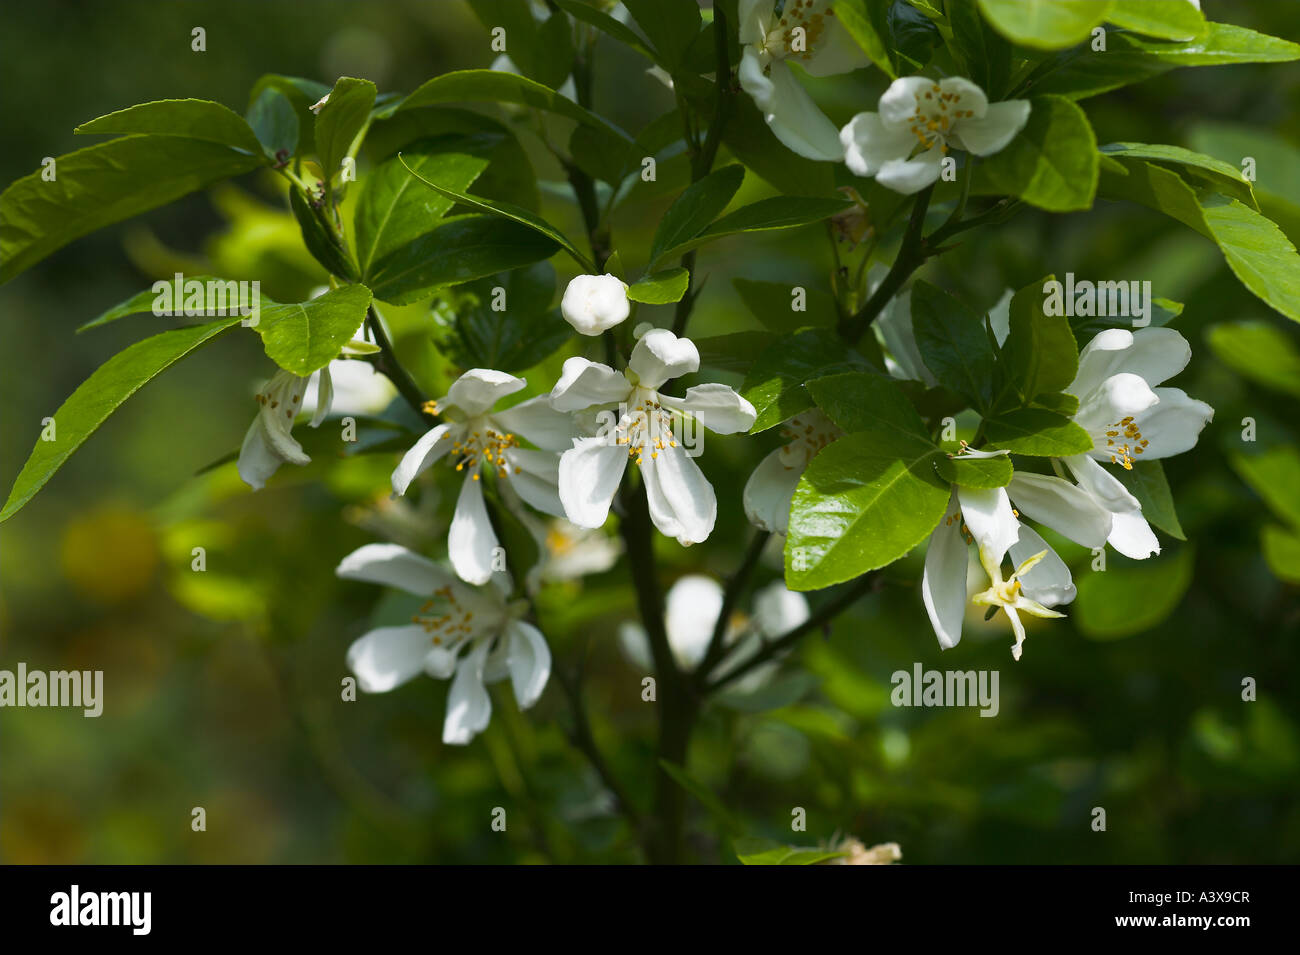 Poncirus trifoliata x Citrus sinensis Carrizo Citrange flowers and leaves Stock Photo